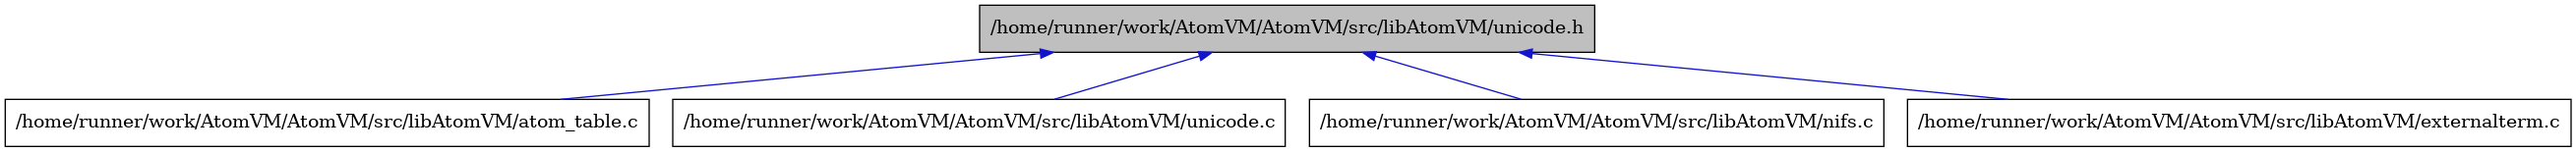 digraph {
    graph [bgcolor="#00000000"]
    node [shape=rectangle style=filled fillcolor="#FFFFFF" font=Helvetica padding=2]
    edge [color="#1414CE"]
    "2" [label="/home/runner/work/AtomVM/AtomVM/src/libAtomVM/atom_table.c" tooltip="/home/runner/work/AtomVM/AtomVM/src/libAtomVM/atom_table.c"]
    "5" [label="/home/runner/work/AtomVM/AtomVM/src/libAtomVM/unicode.c" tooltip="/home/runner/work/AtomVM/AtomVM/src/libAtomVM/unicode.c"]
    "1" [label="/home/runner/work/AtomVM/AtomVM/src/libAtomVM/unicode.h" tooltip="/home/runner/work/AtomVM/AtomVM/src/libAtomVM/unicode.h" fillcolor="#BFBFBF"]
    "4" [label="/home/runner/work/AtomVM/AtomVM/src/libAtomVM/nifs.c" tooltip="/home/runner/work/AtomVM/AtomVM/src/libAtomVM/nifs.c"]
    "3" [label="/home/runner/work/AtomVM/AtomVM/src/libAtomVM/externalterm.c" tooltip="/home/runner/work/AtomVM/AtomVM/src/libAtomVM/externalterm.c"]
    "1" -> "2" [dir=back tooltip="include"]
    "1" -> "3" [dir=back tooltip="include"]
    "1" -> "4" [dir=back tooltip="include"]
    "1" -> "5" [dir=back tooltip="include"]
}